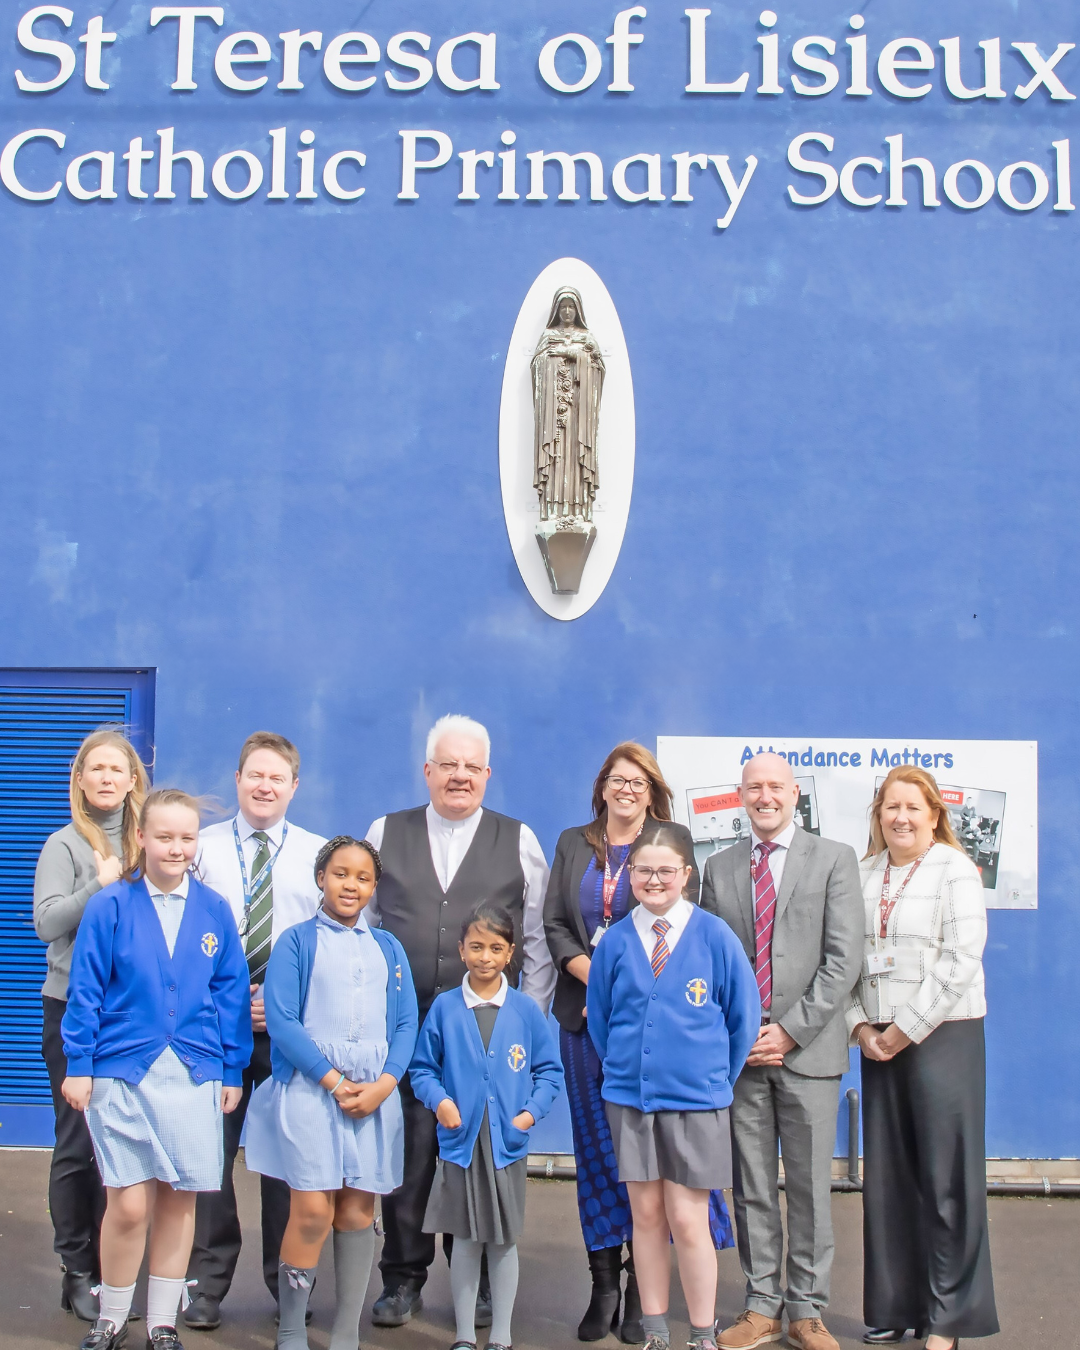 St Teresa of Lisieux Catholic Primary School joins All Saints Multi Academy Trust